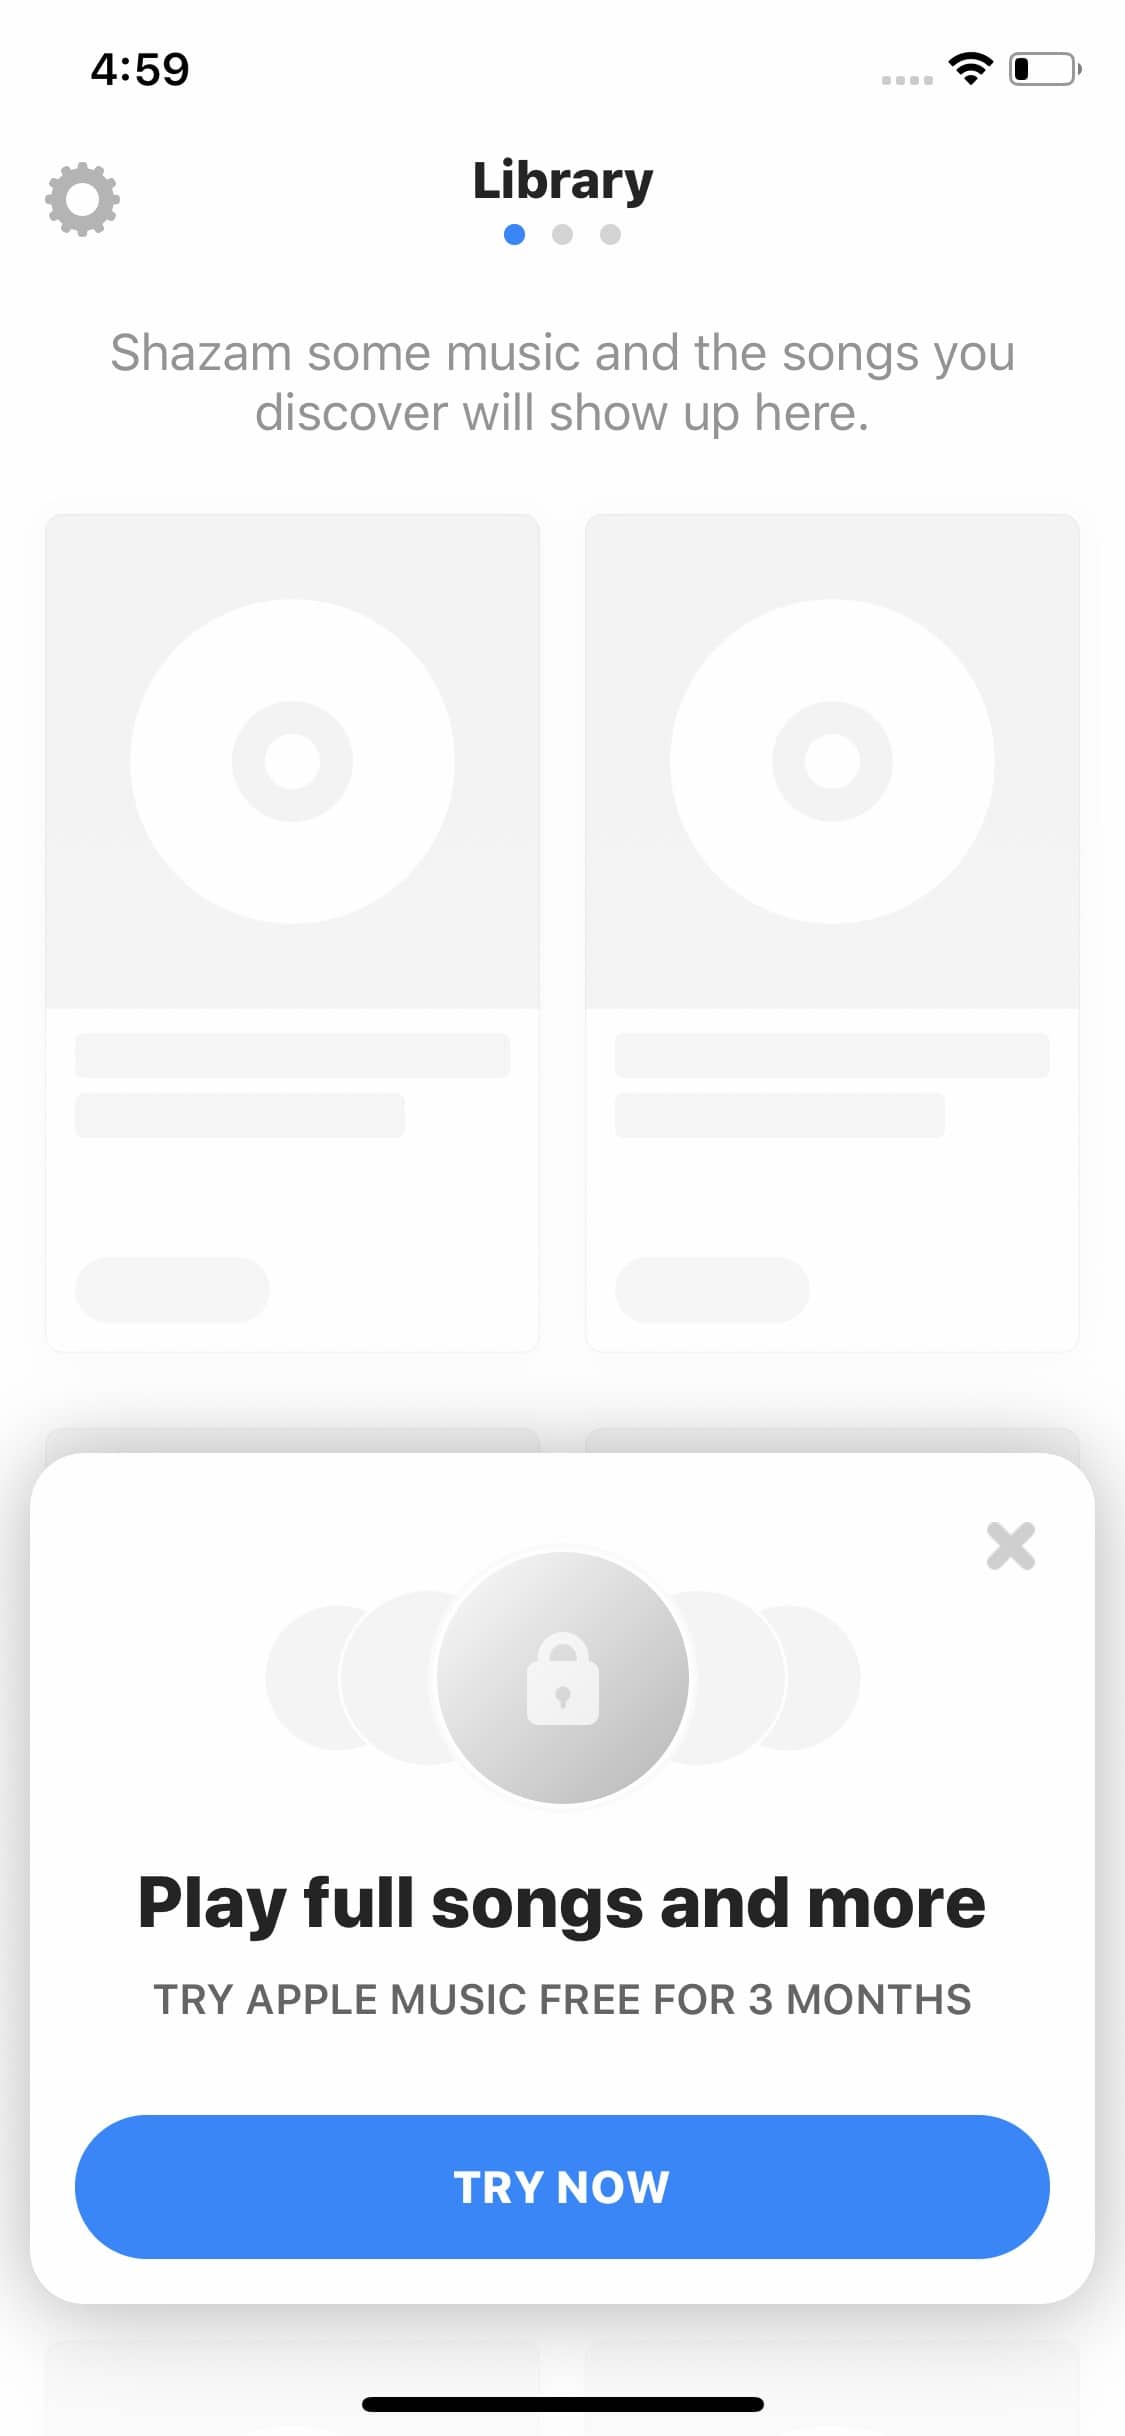 Apple Music Free Shazam offer